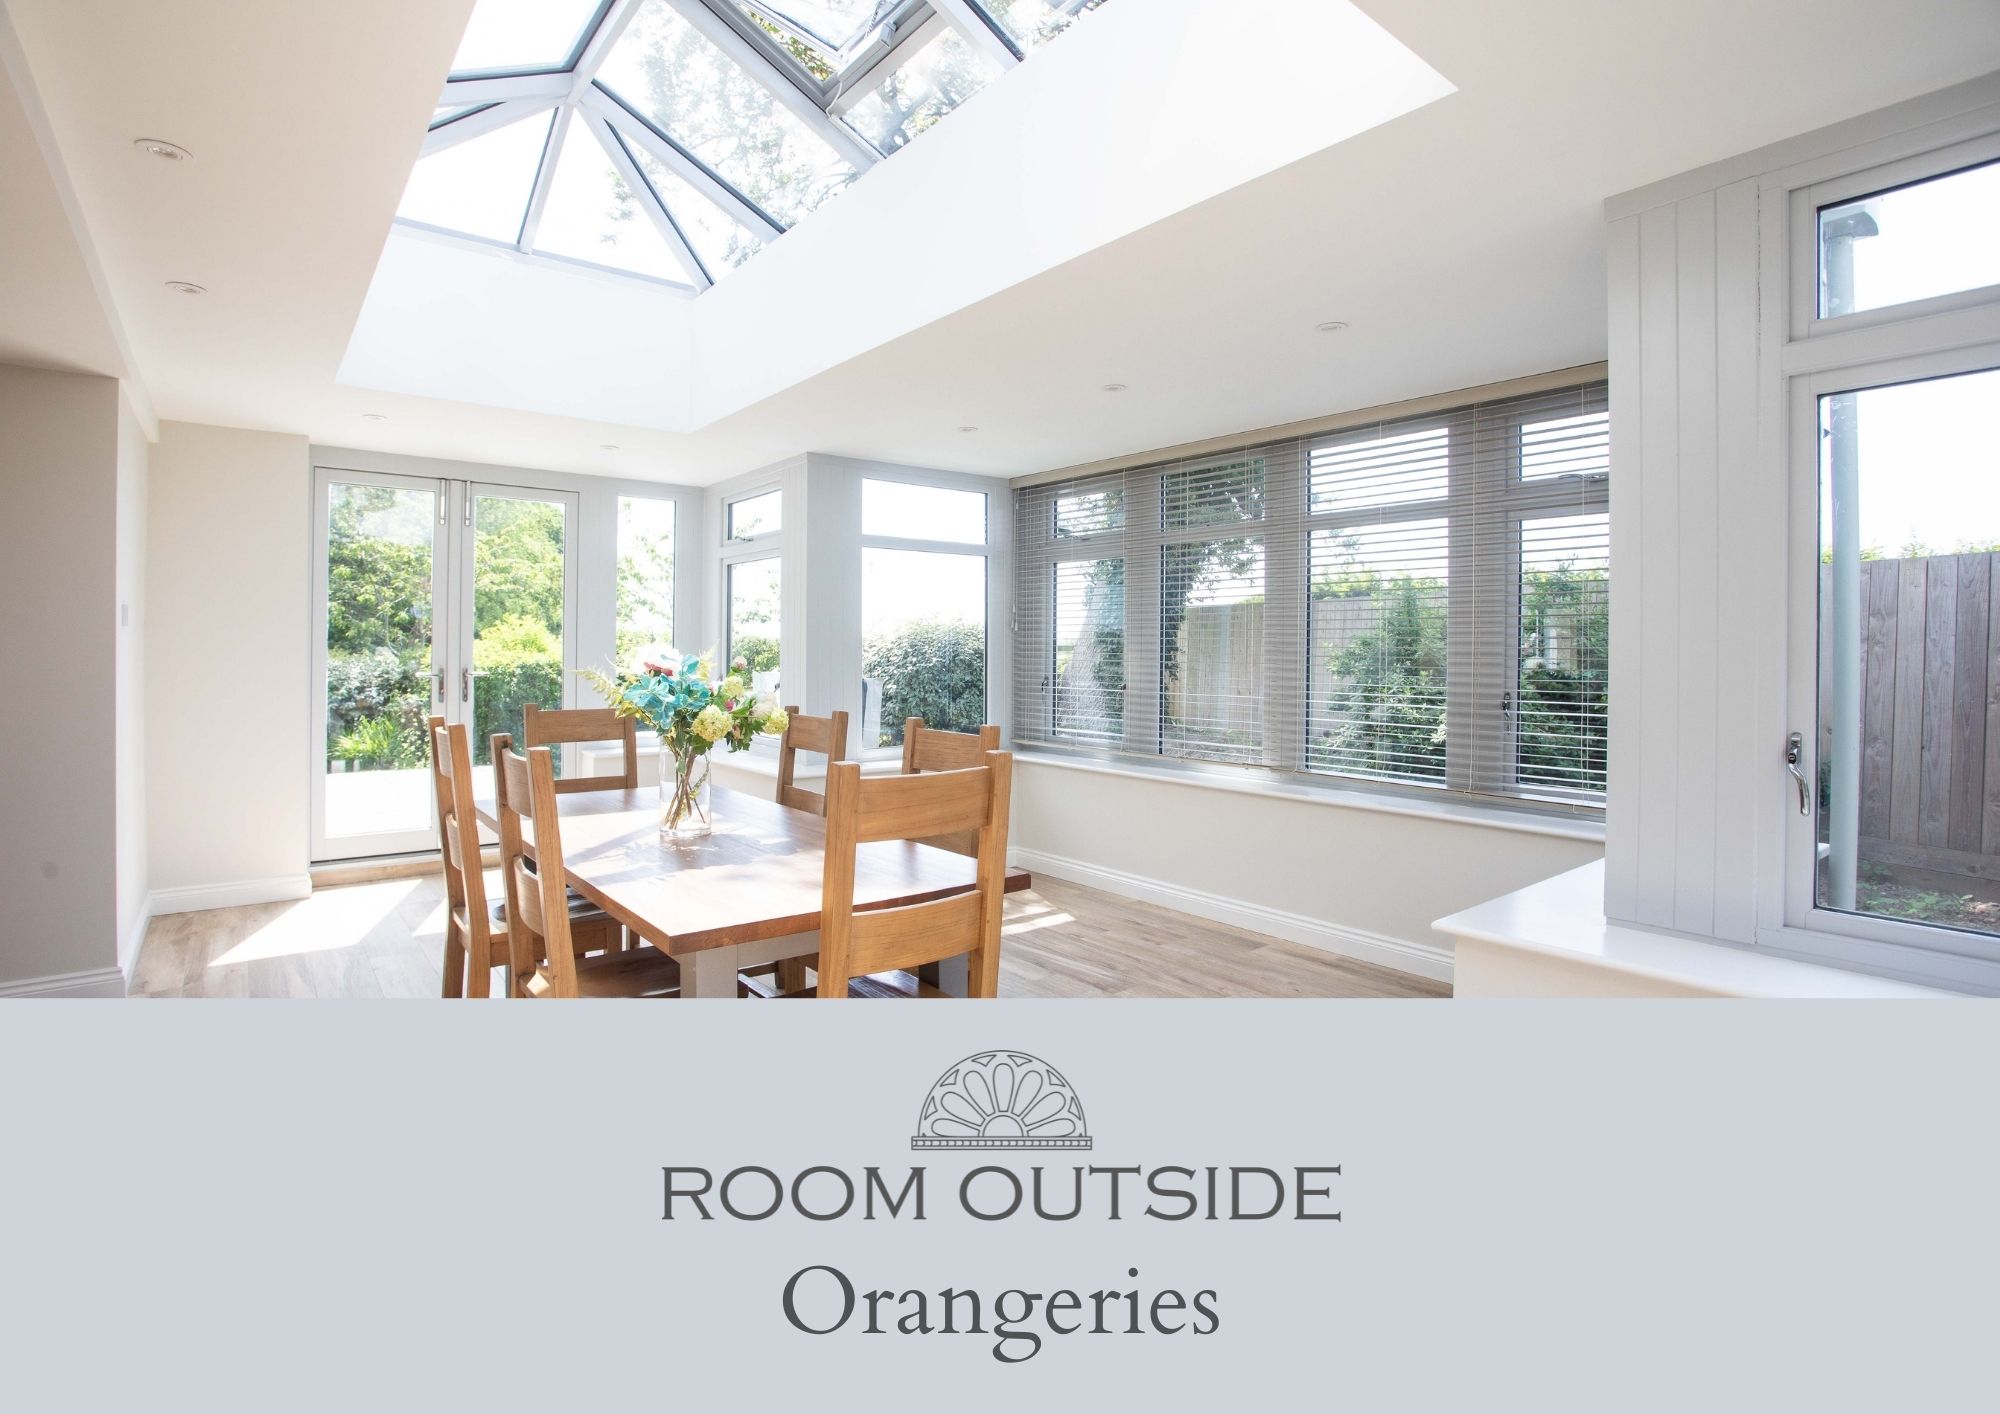 Room Outside Orangery Brochure Download